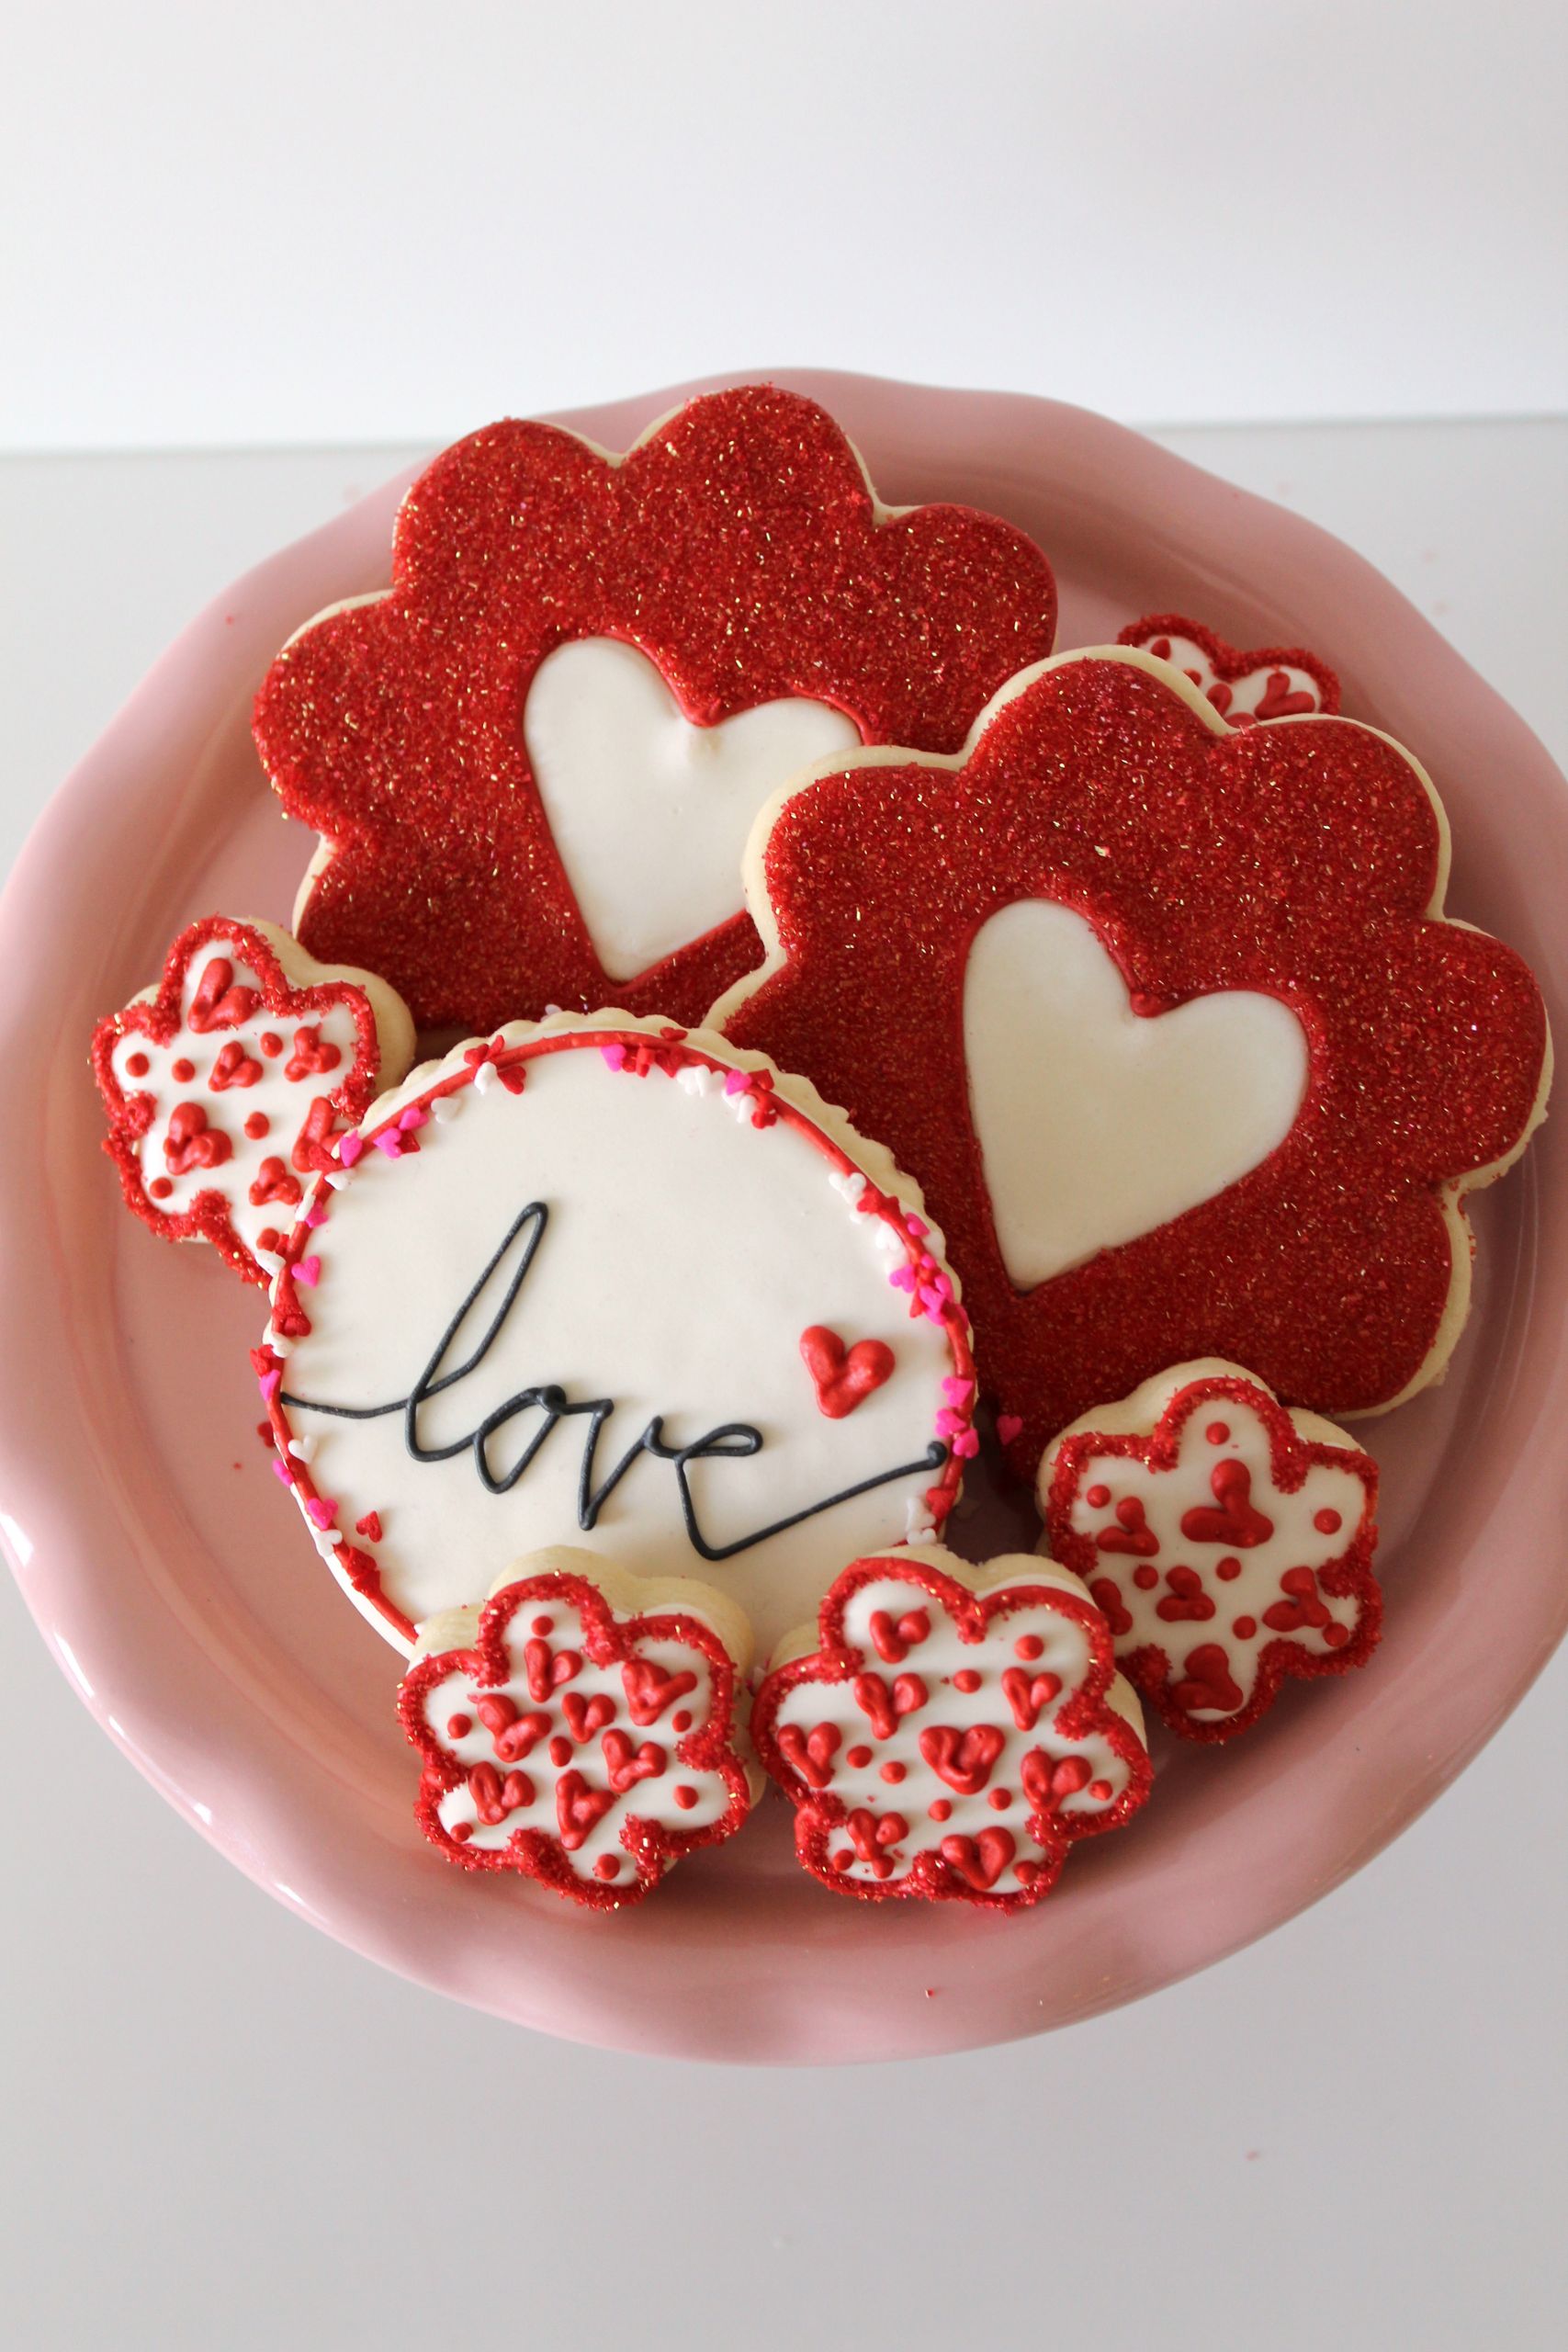 Decorating Valentine Sugar Cookies
 Heart Themed Decorated Cookies for Valentine’s Day